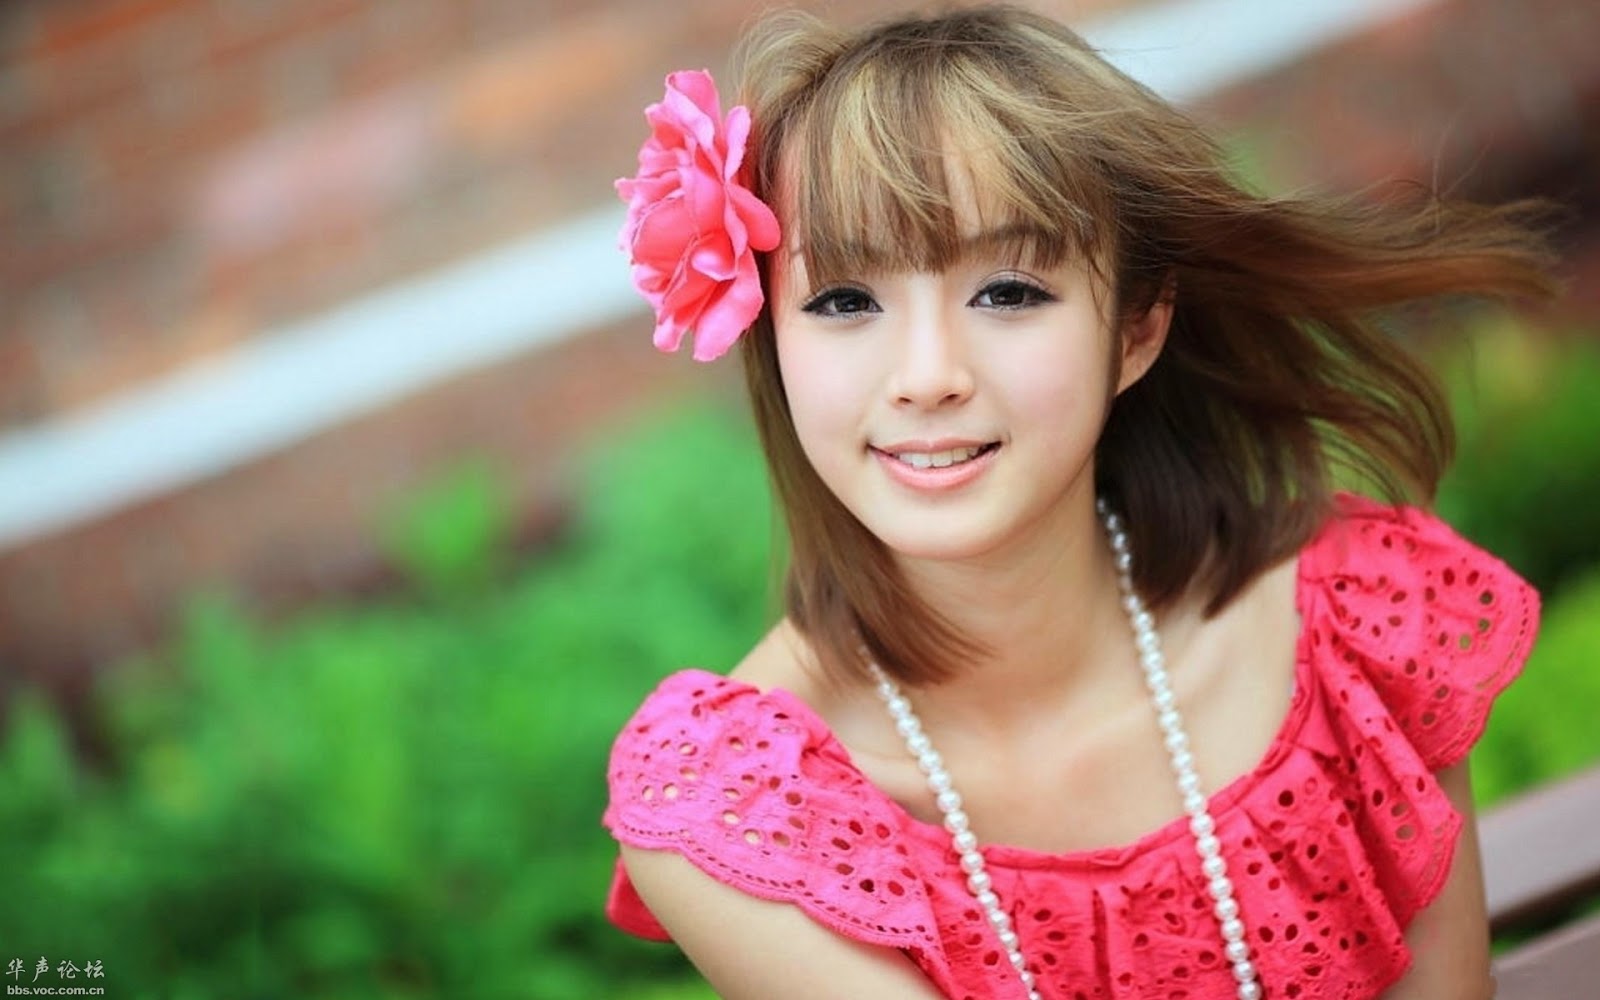 Beautiful Chinese Girls Wallpapers Free Download | Most beautiful ...